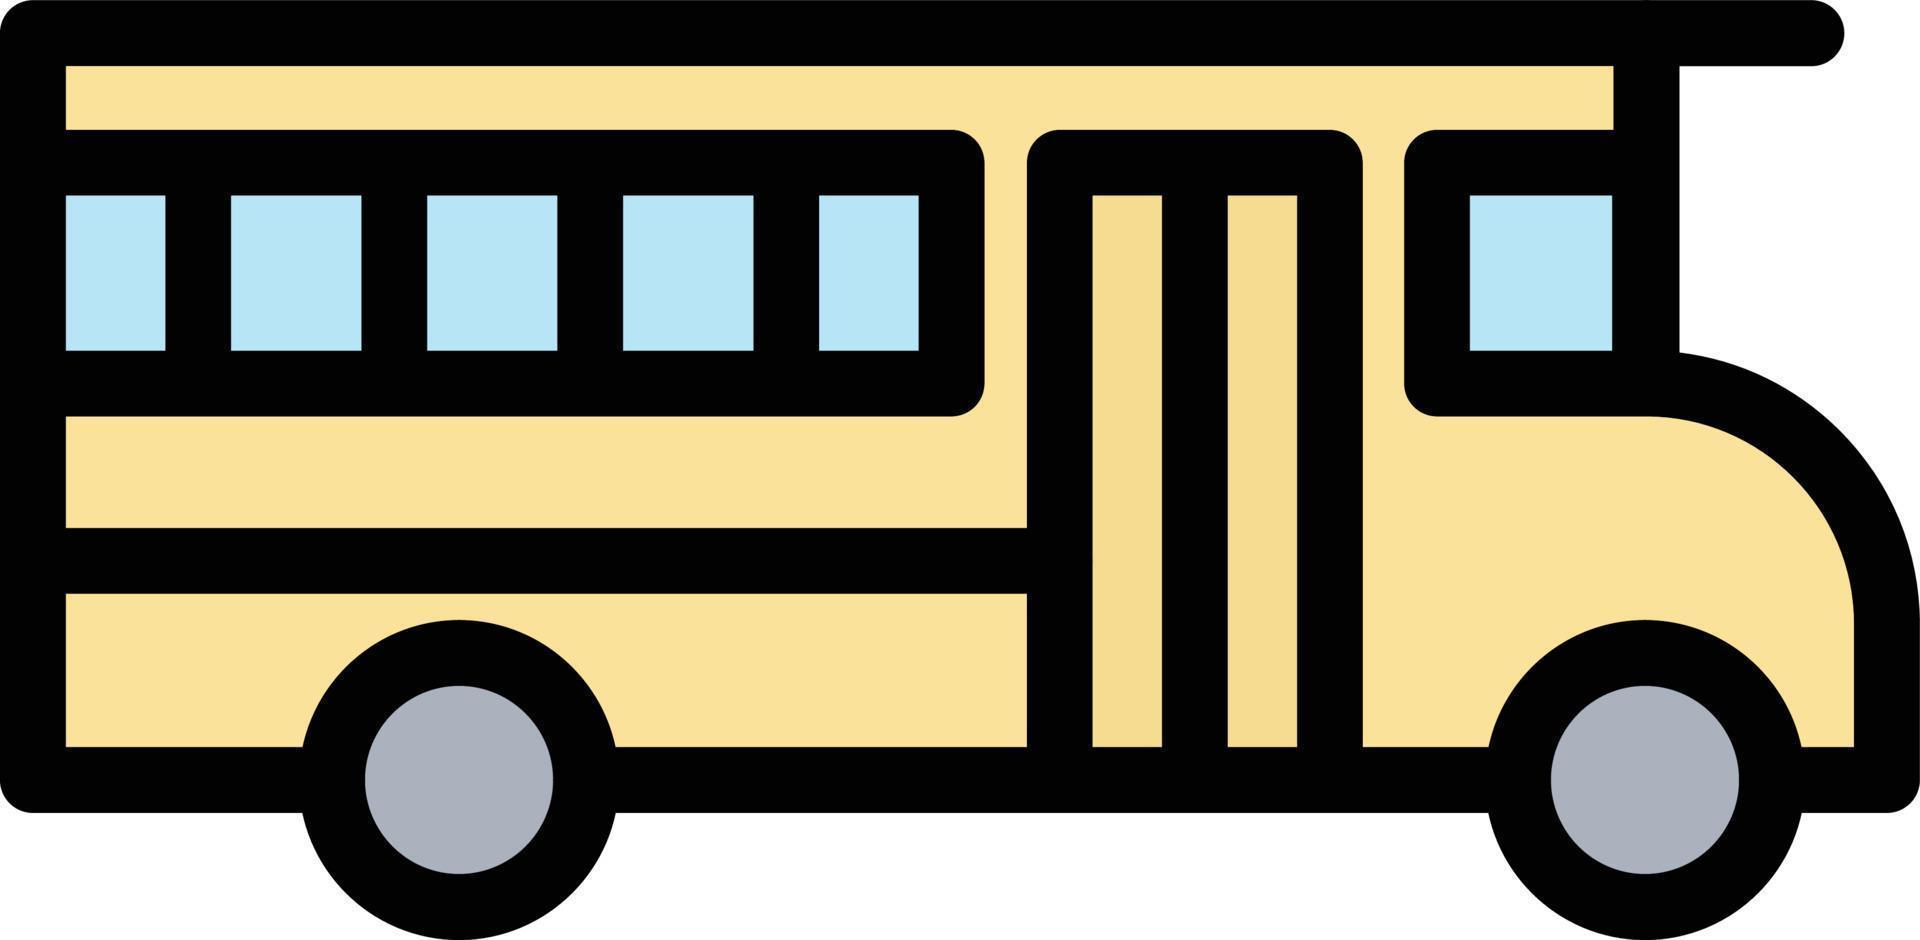 skolbuss vektor ikon